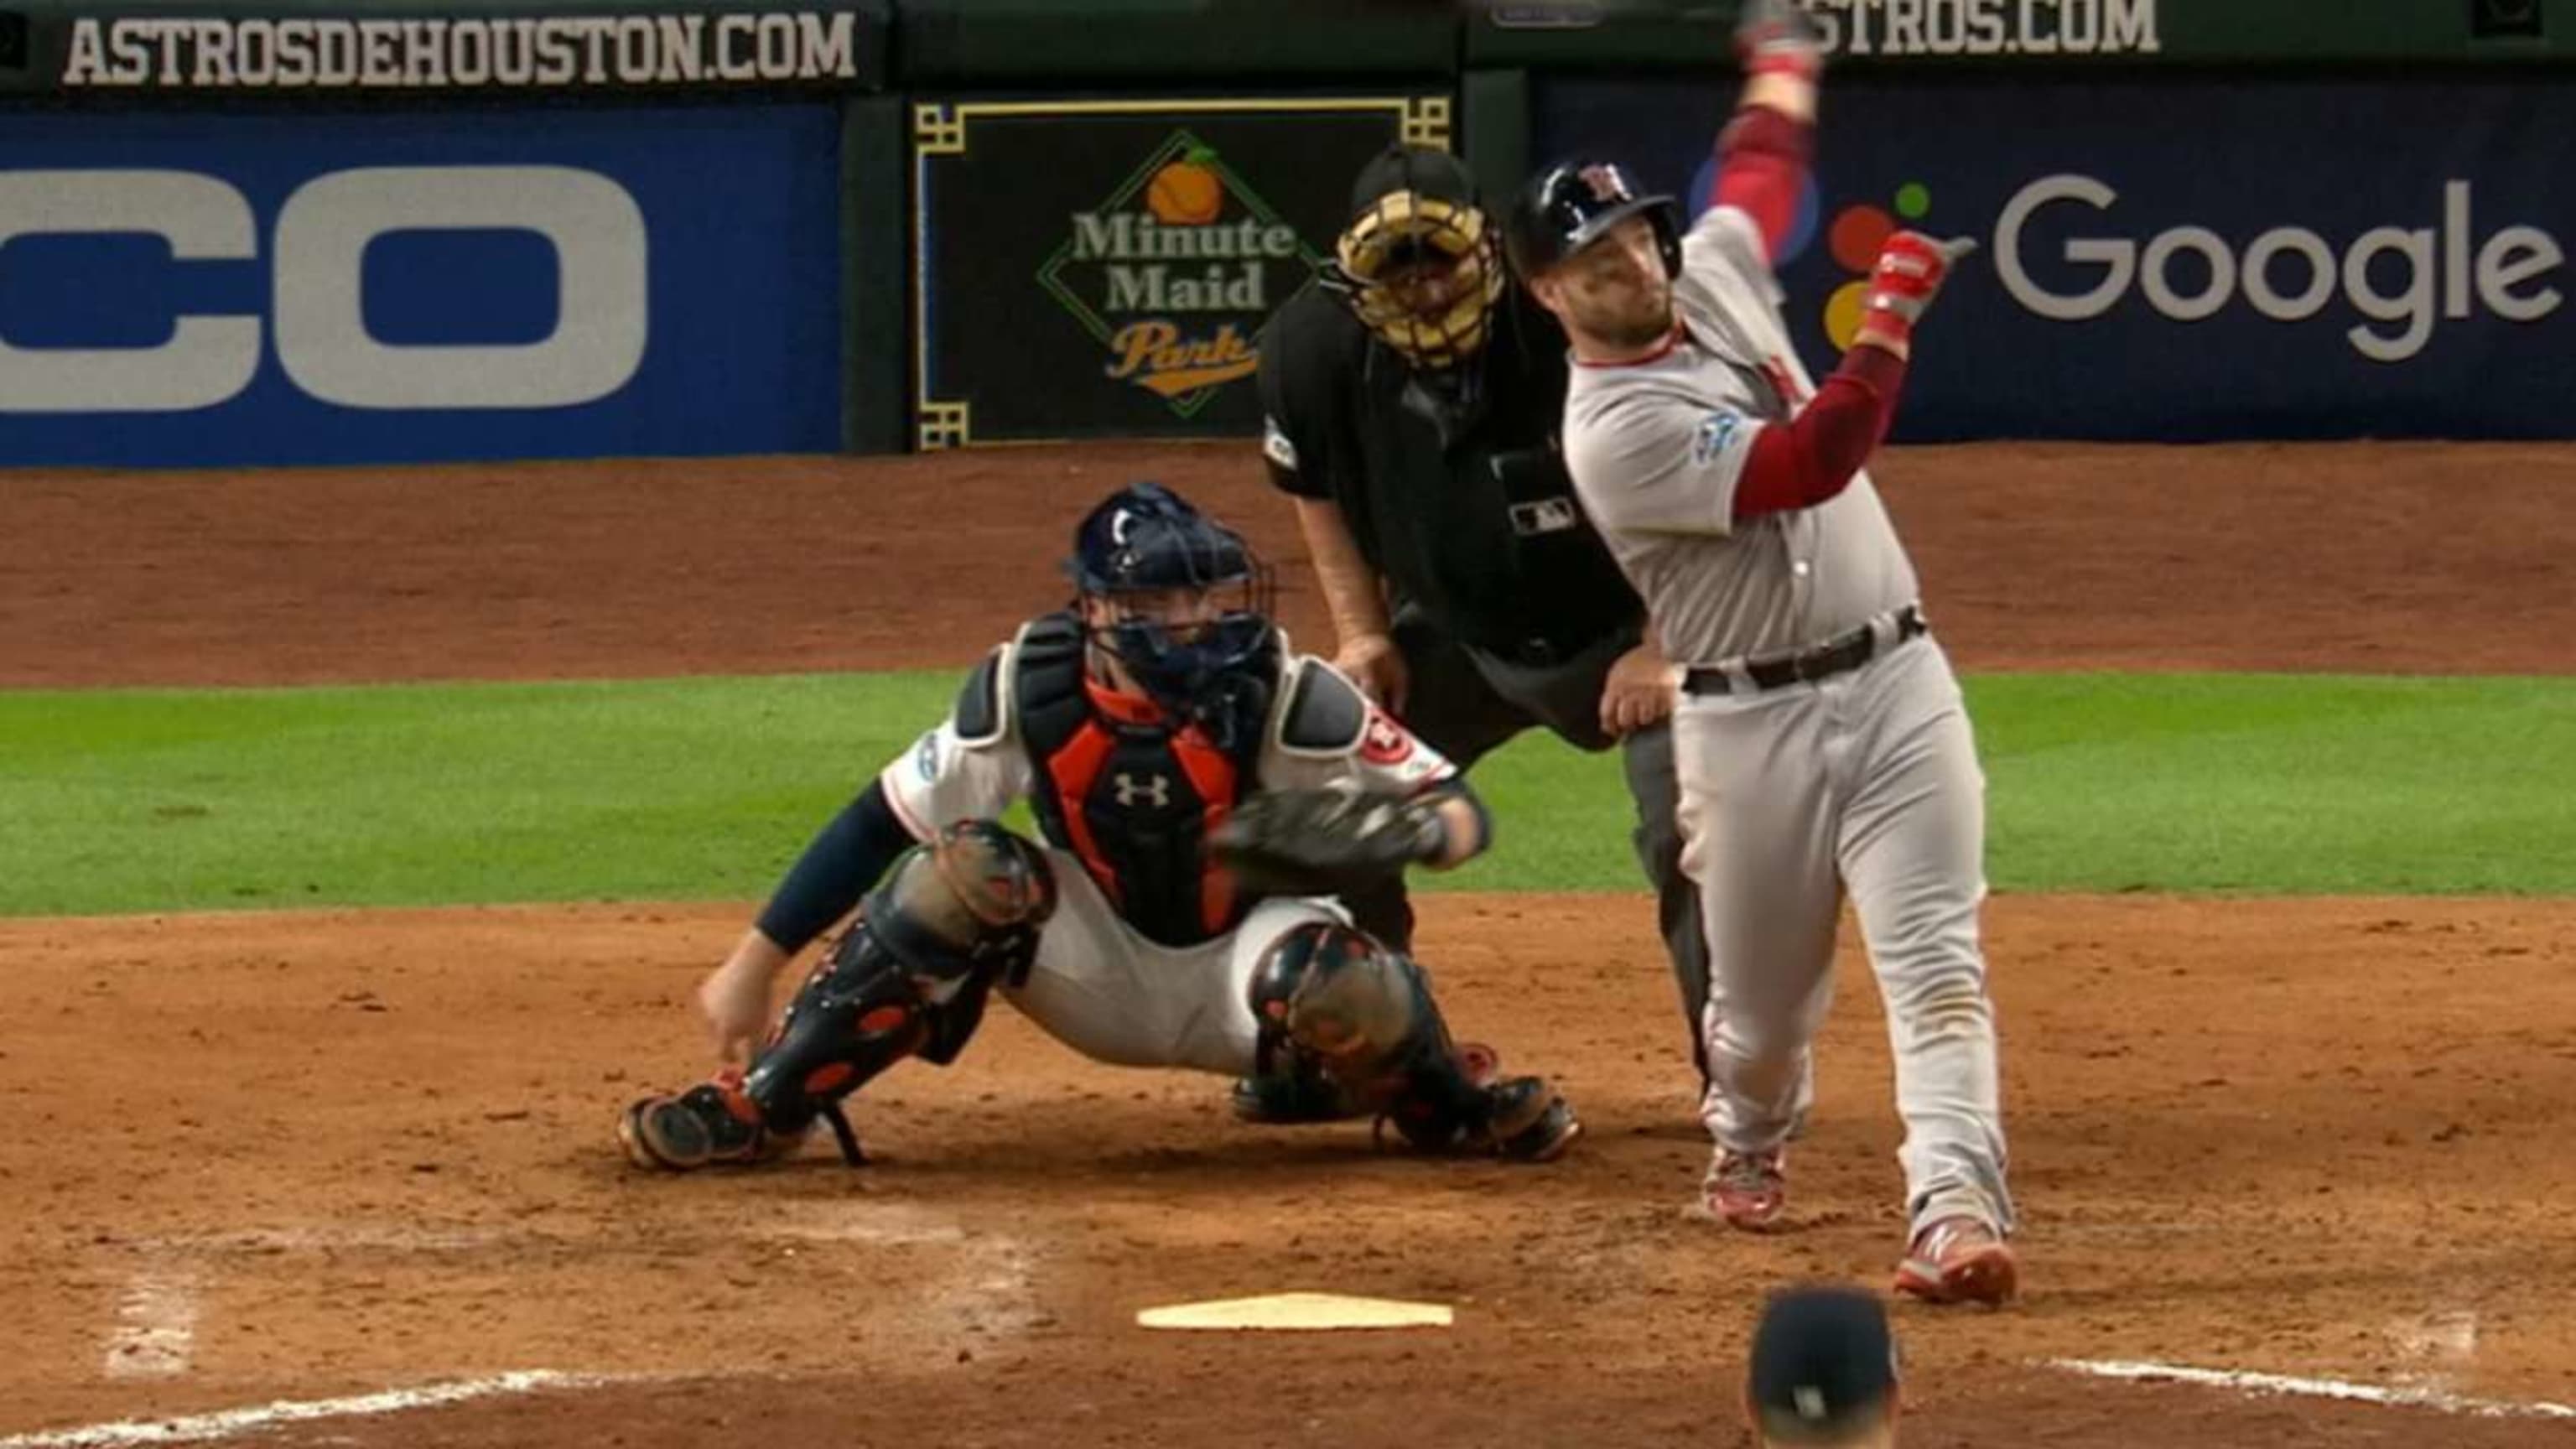 Bradley's slam helps Red Sox beat Astros 8-2 in ALCS